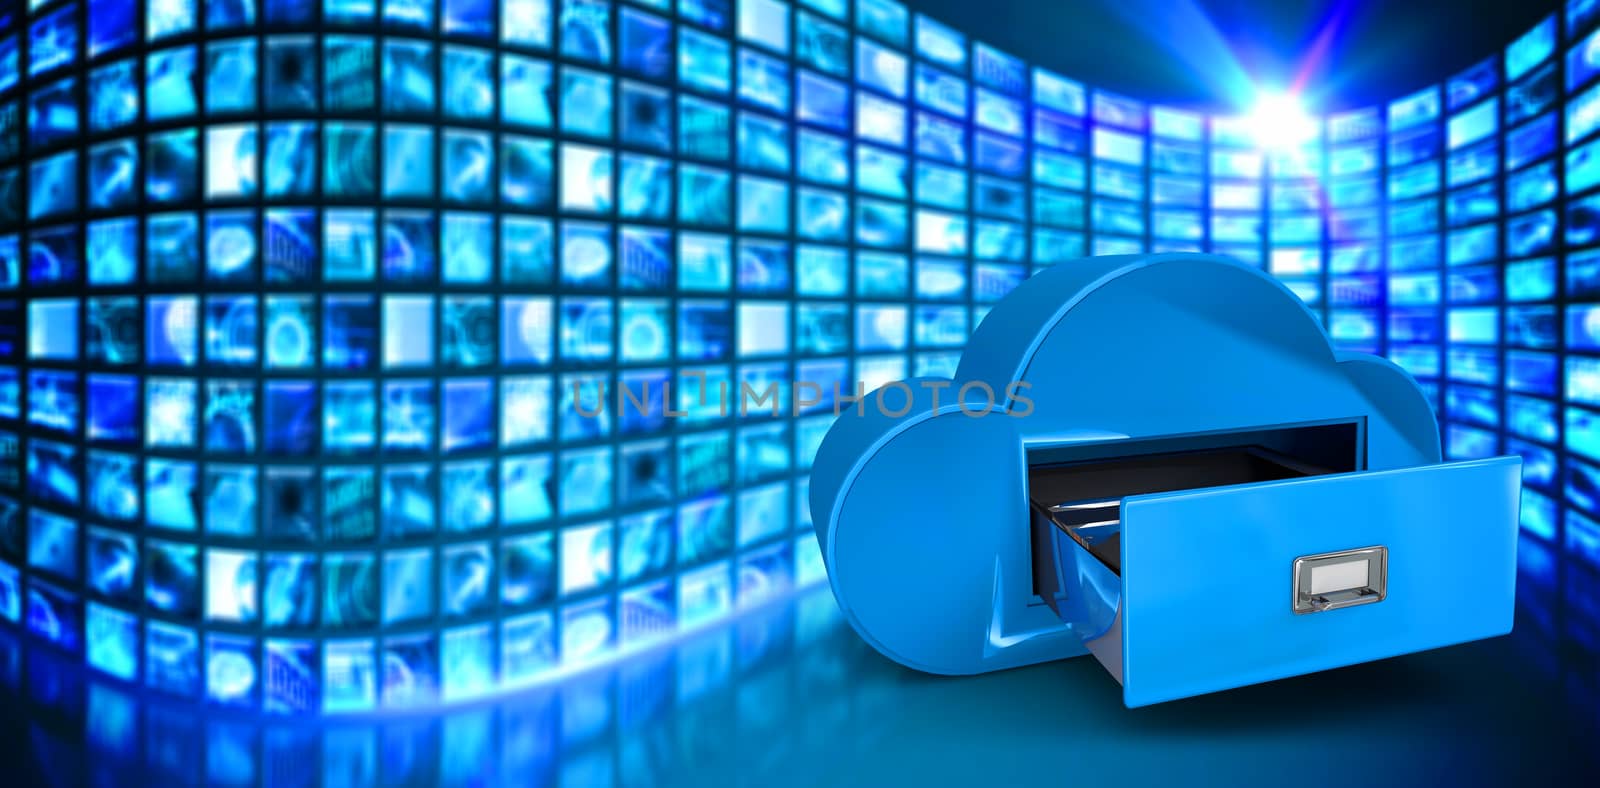 Cloud computing drawer against curve of digital screens in blue